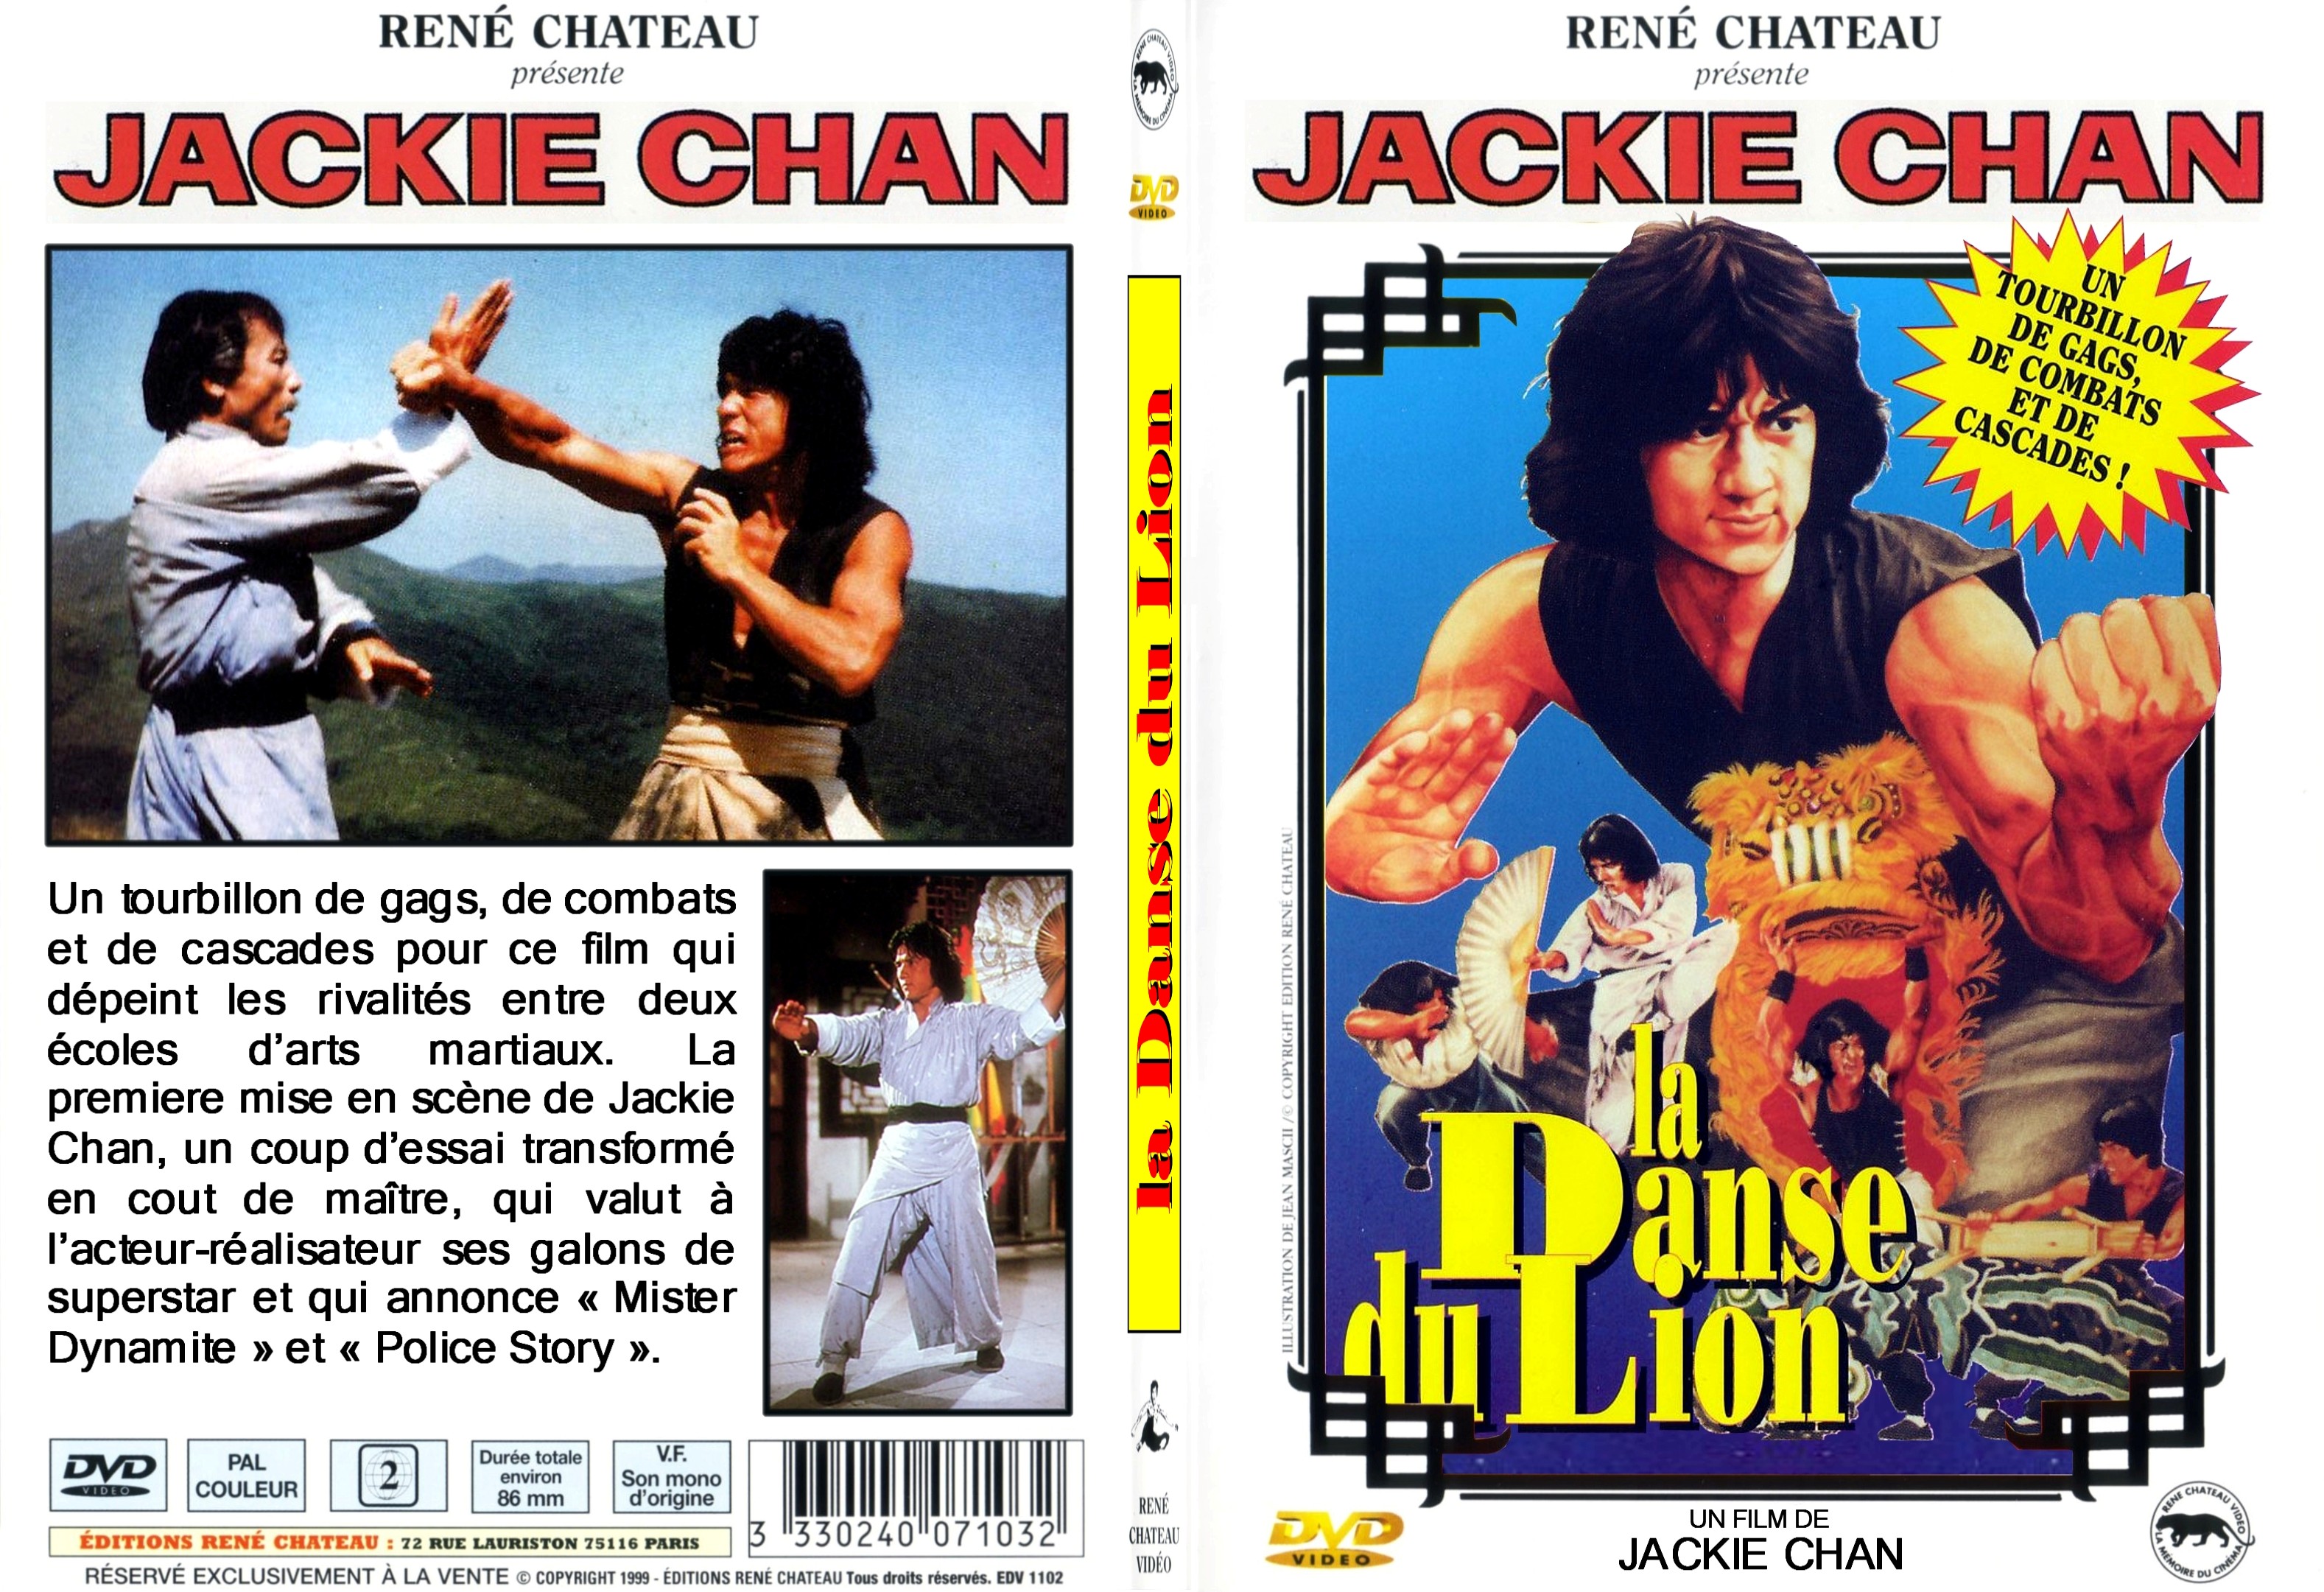 Jaquette DVD La danse du lion custom - SLIM v2